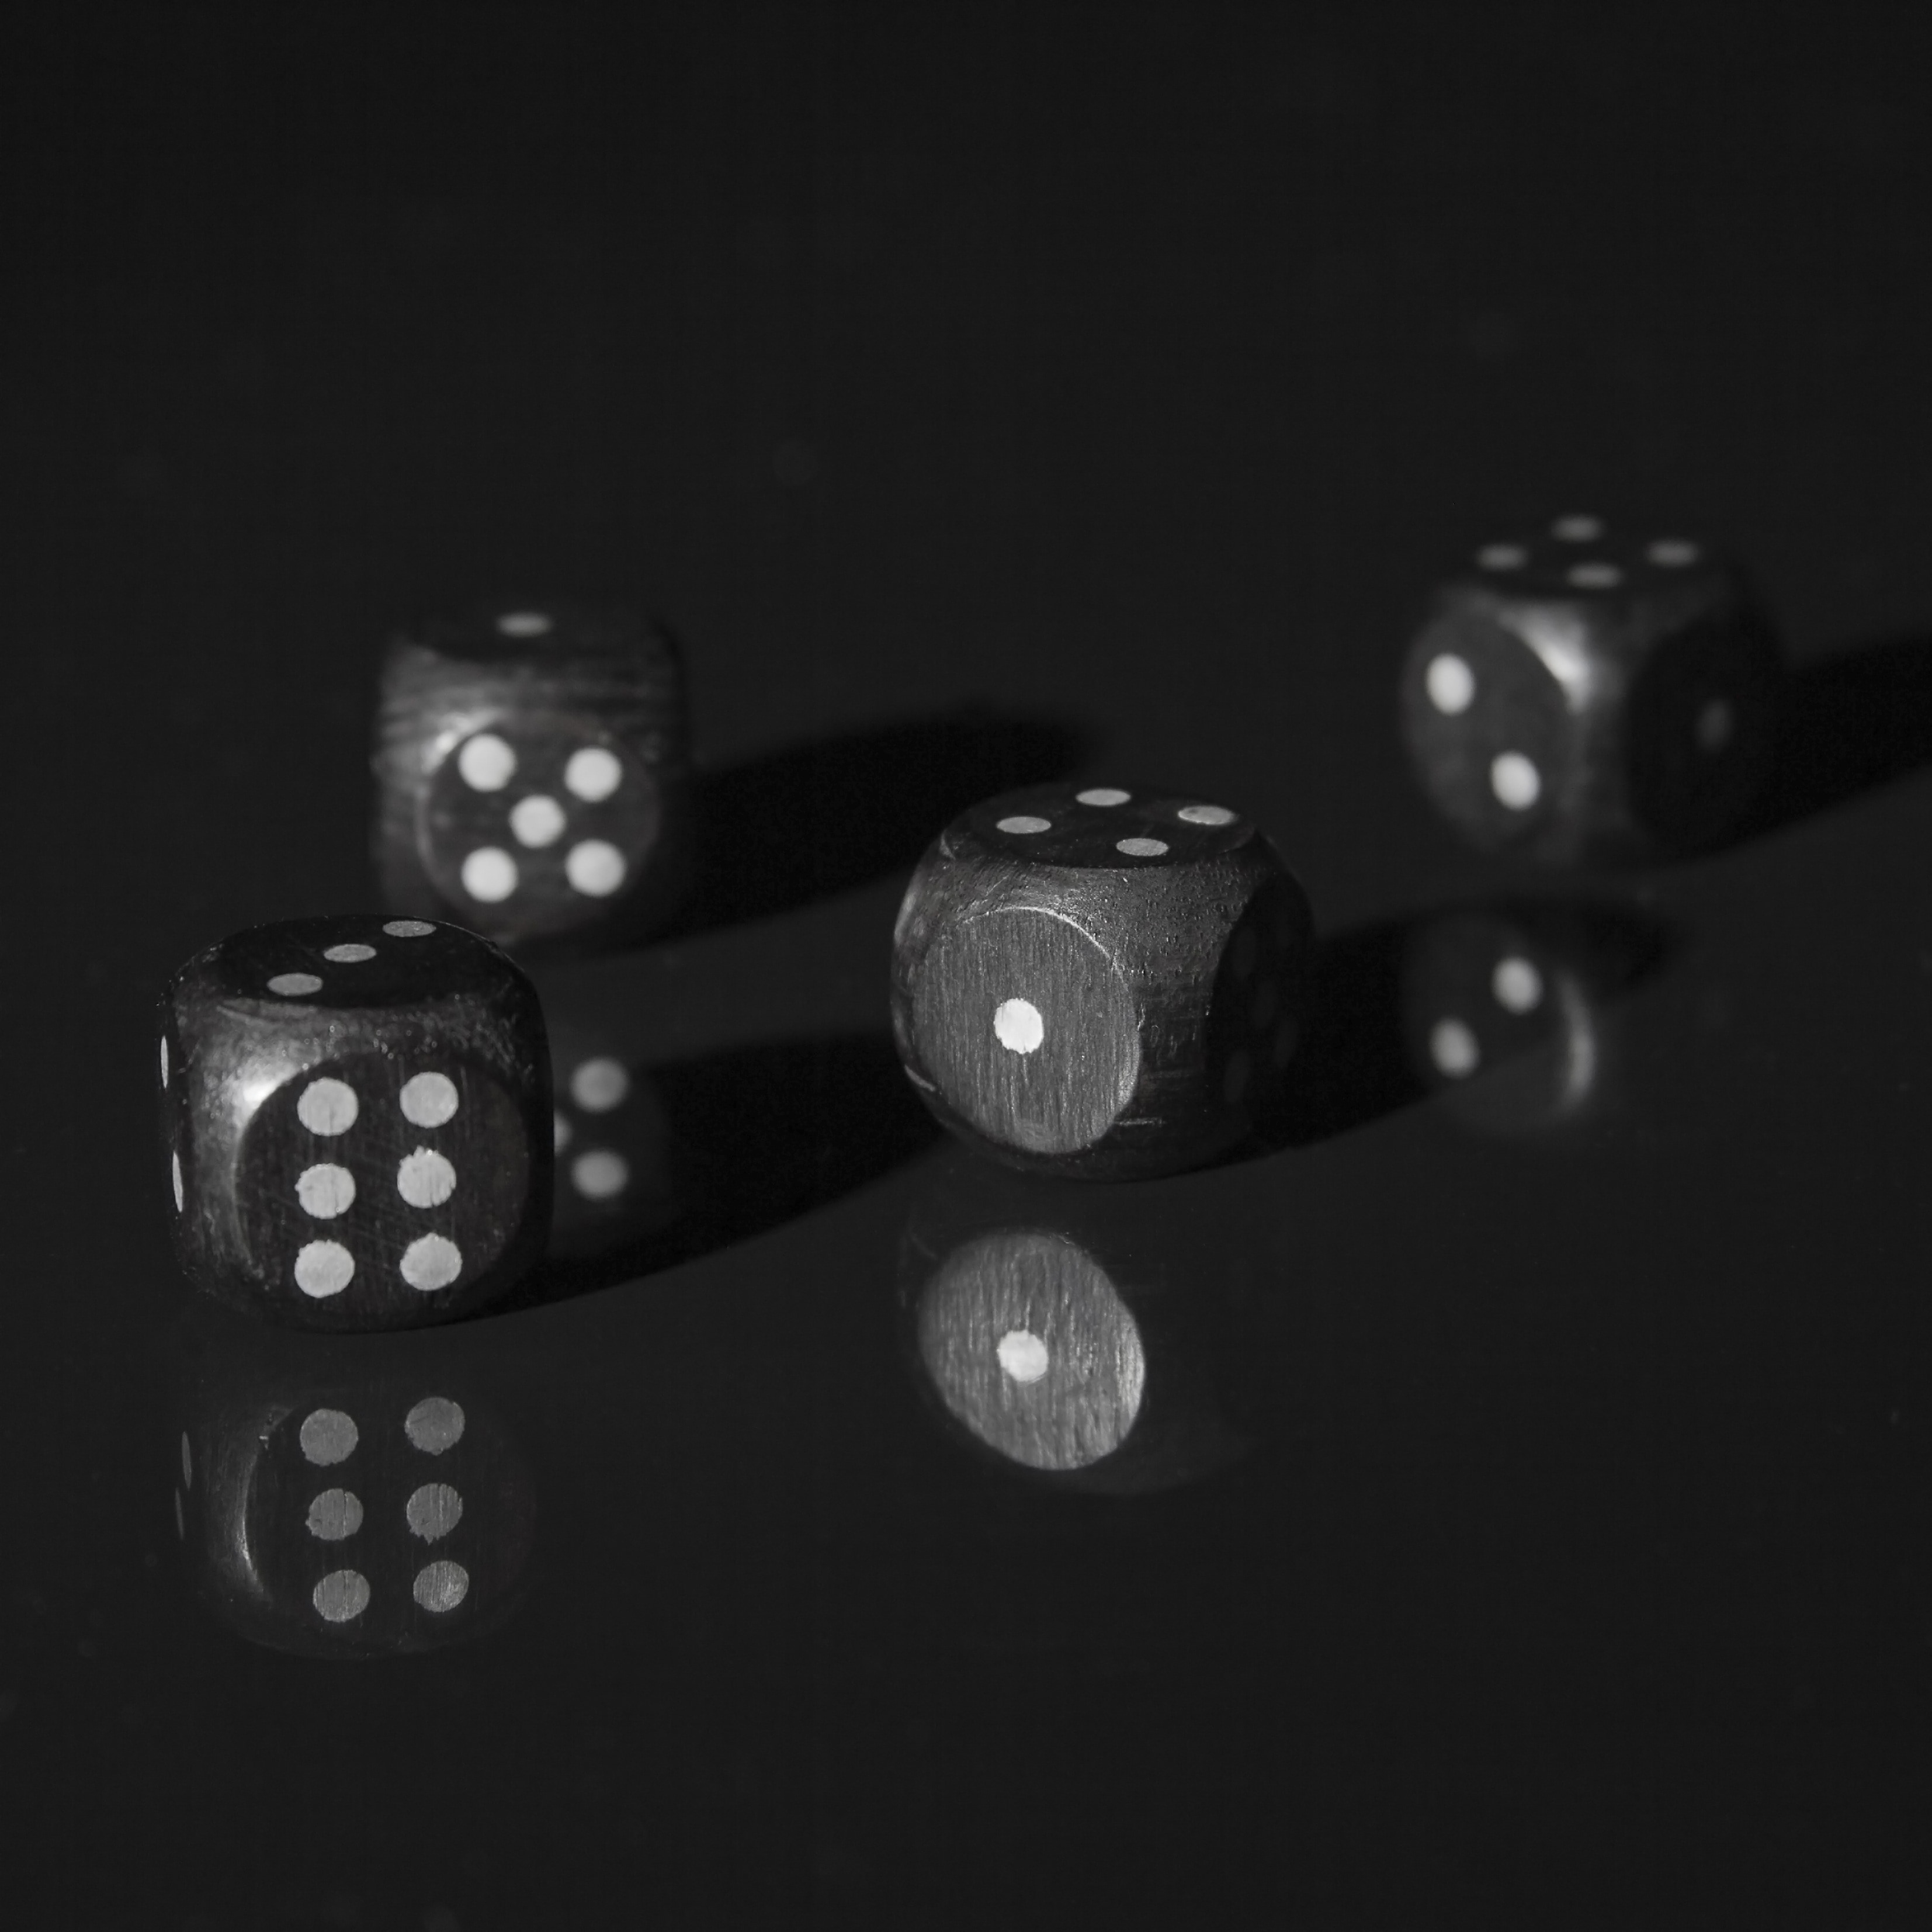 Number, Game, Dice, Random, Cube, Shadow, dice, night